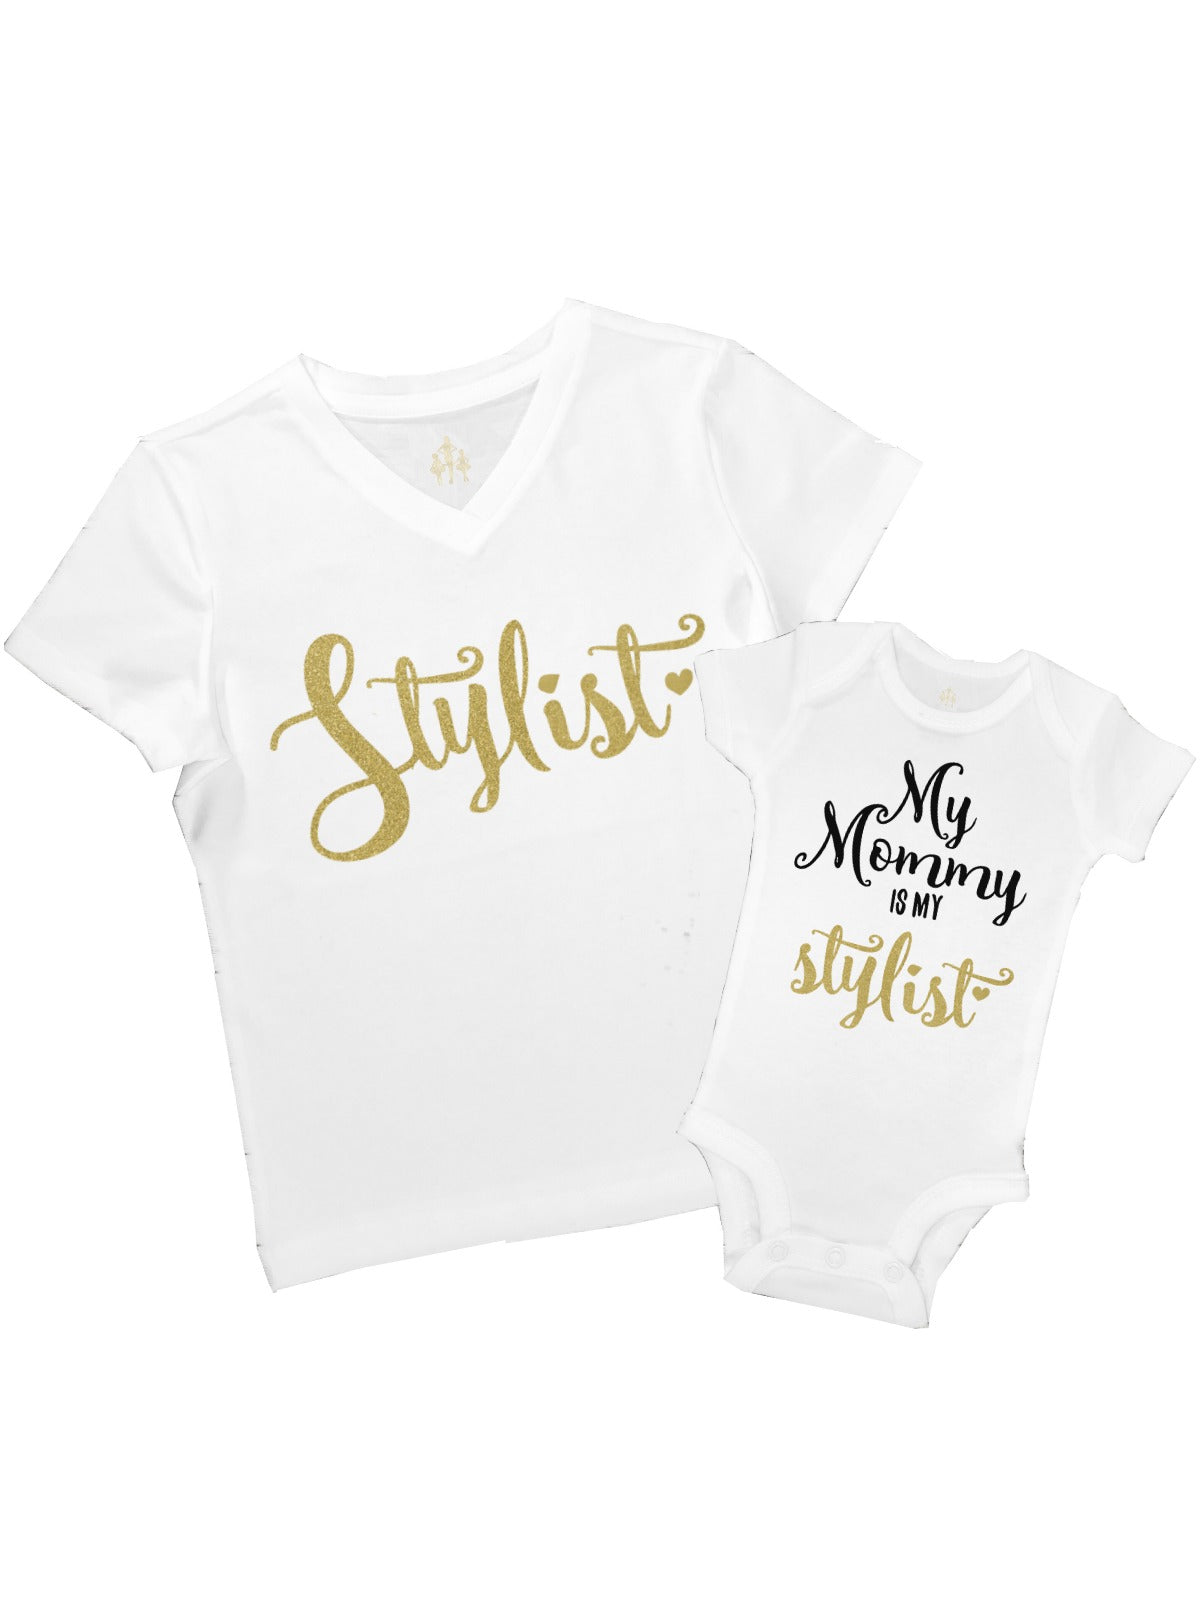 My Mommy Is My Stylist | Stylist | Matching T-Shirts